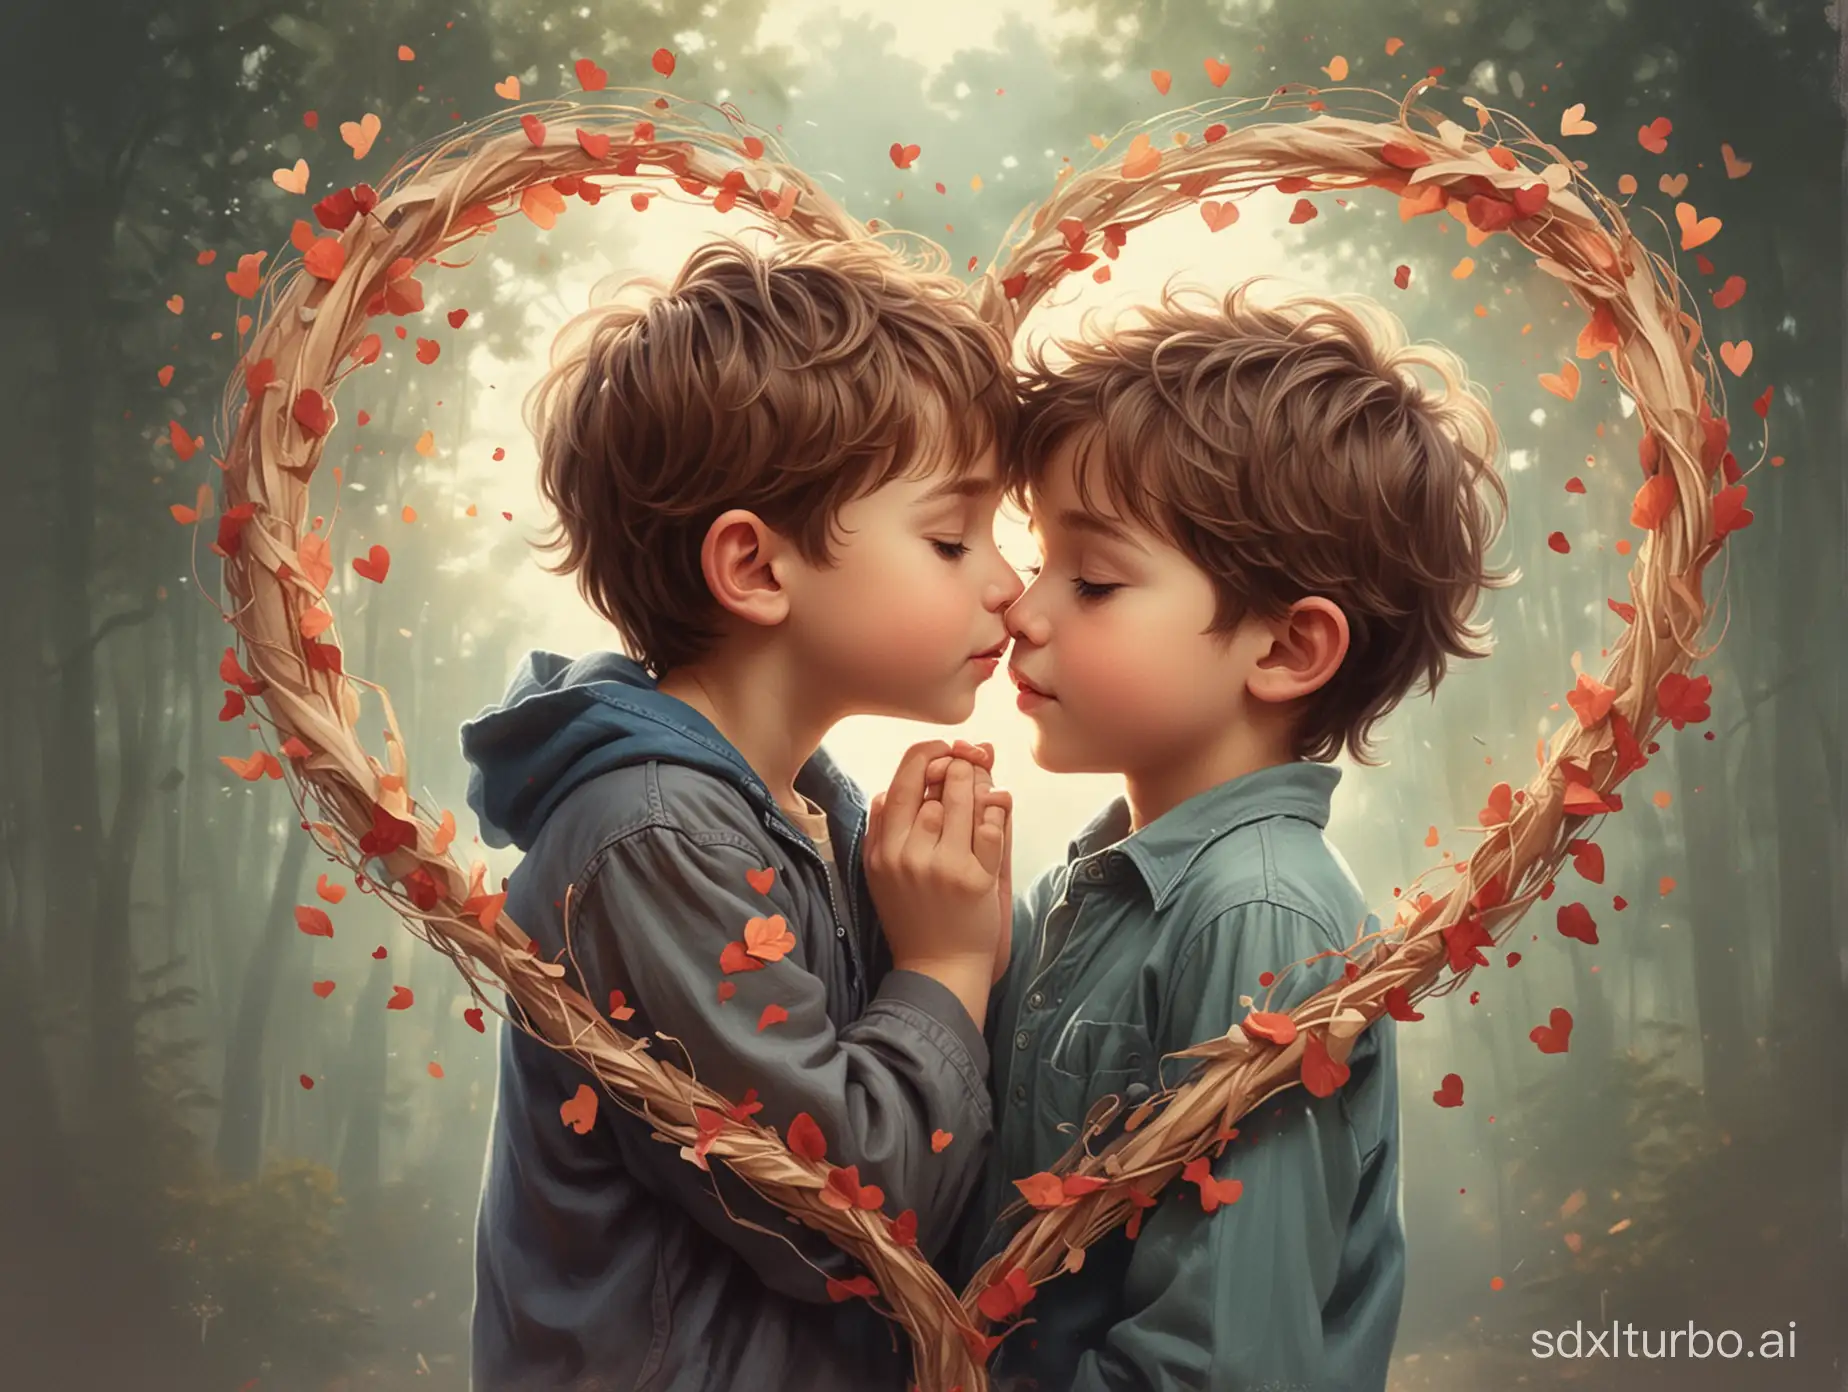 Boys-Expressing-Heartfelt-Love-Through-Tender-Embrace